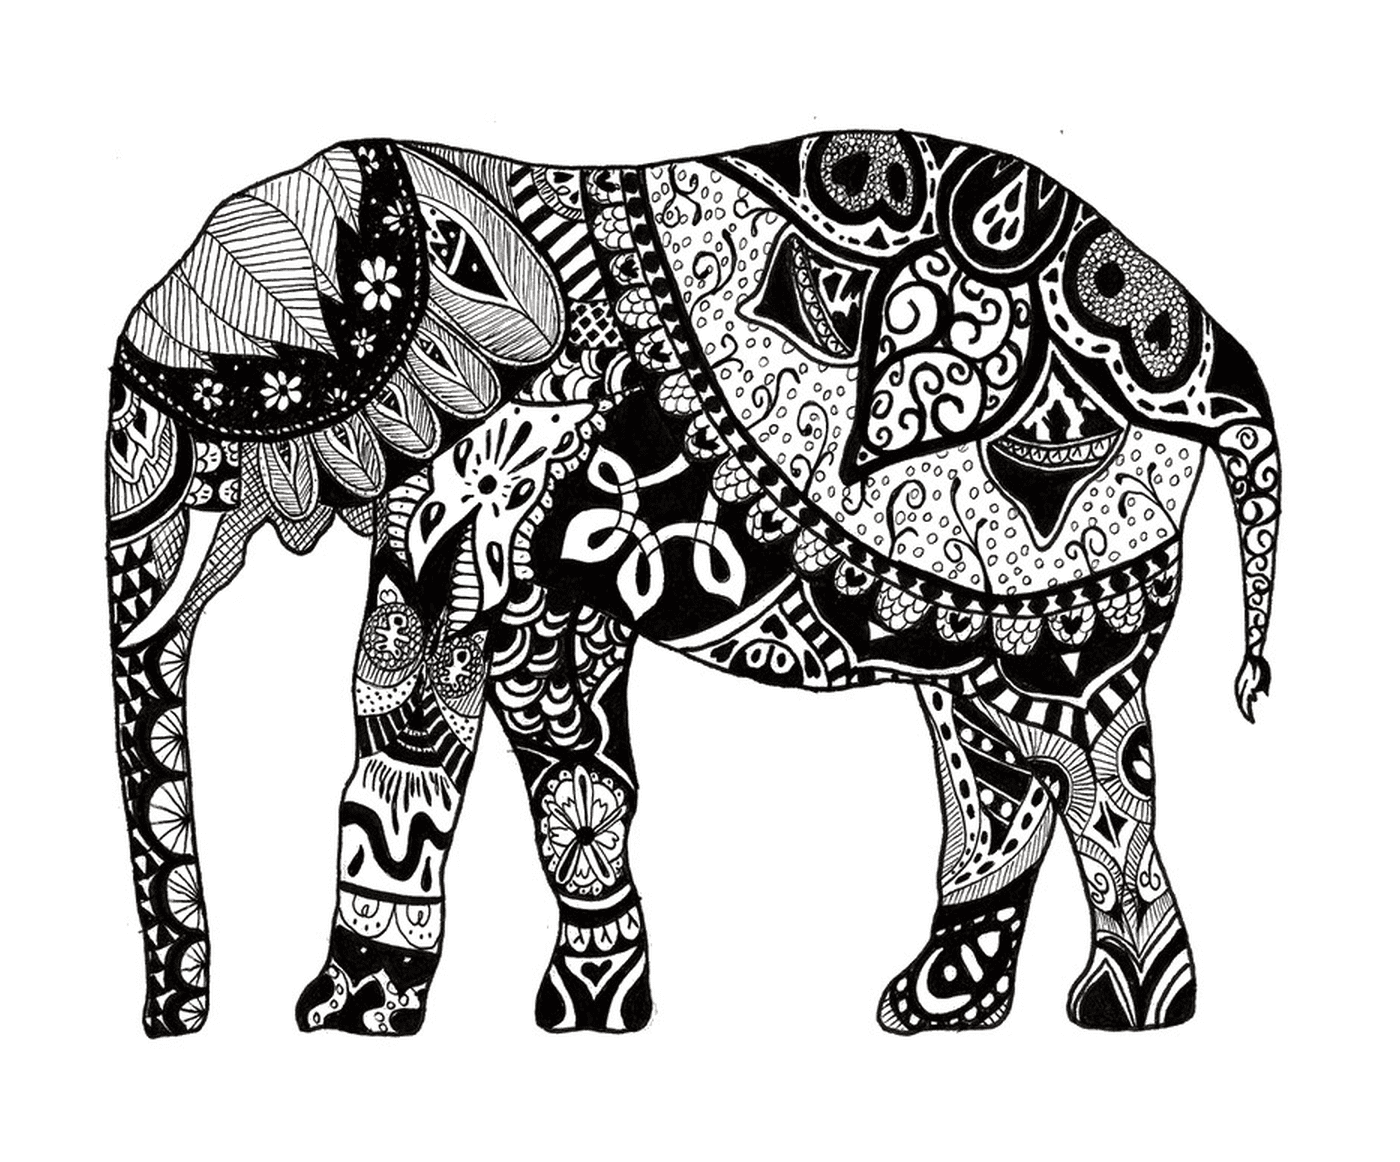  Слон со многими мандалами на его теле 